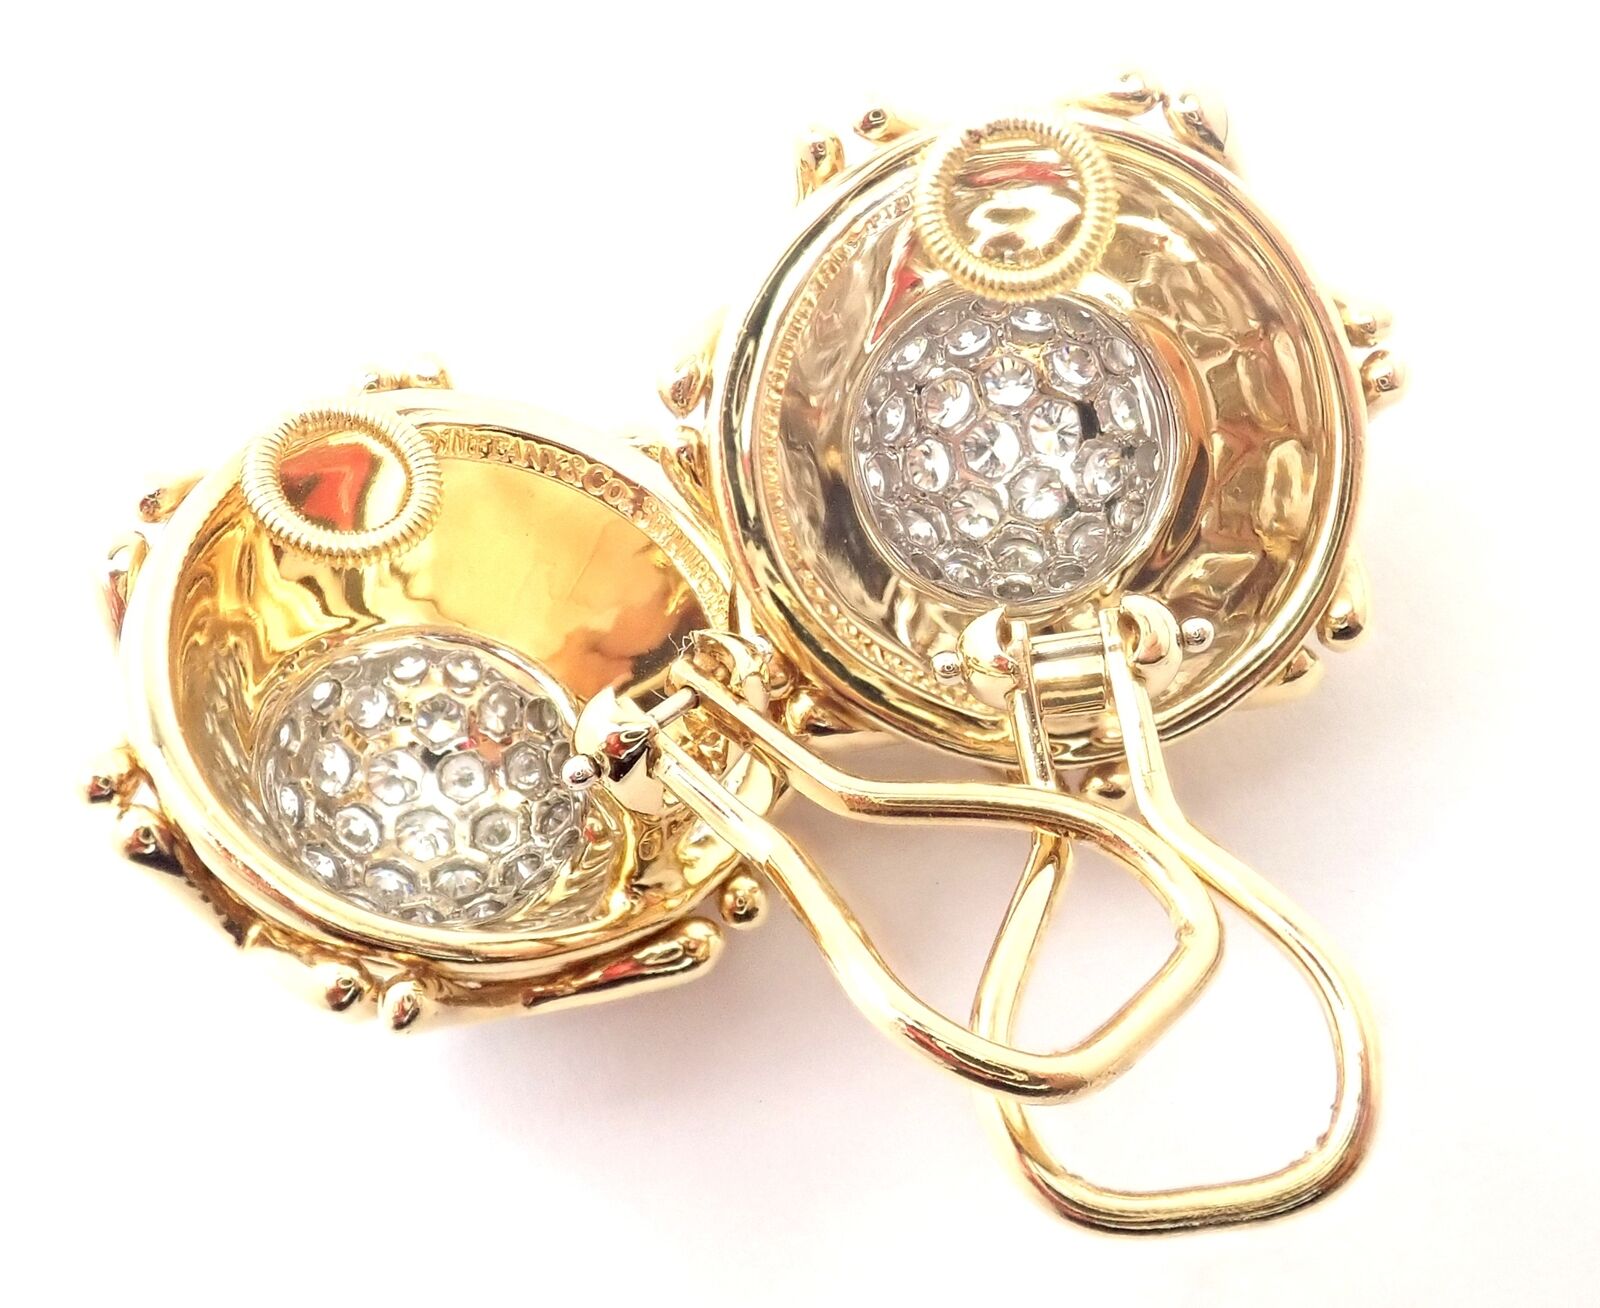 Jean Schlumberger for Tiffany & Co. Jewelry & Watches:Fine Jewelry:Earrings Tiffany & Co Schlumberger Multiplication 18k Yellow Gold Diamond Earrings